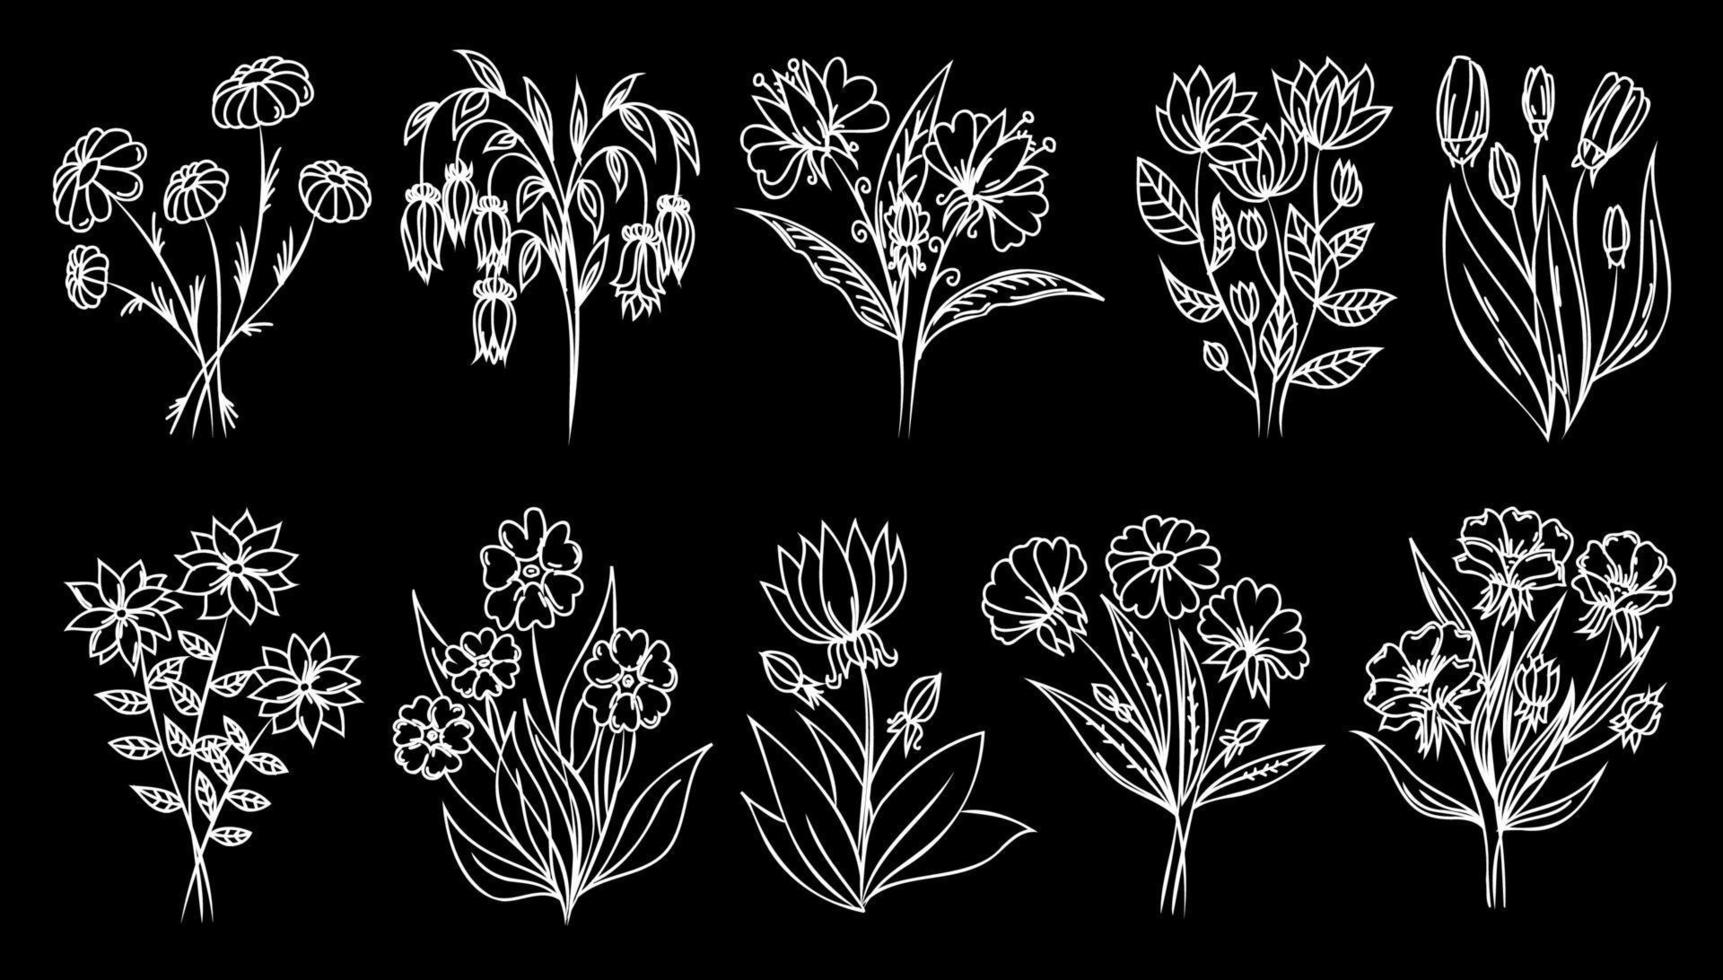 vita kontur blommor på svart bakgrund. linje konst blommor, linjär blommig set. tunn linje blomma illustrationer set. vektor